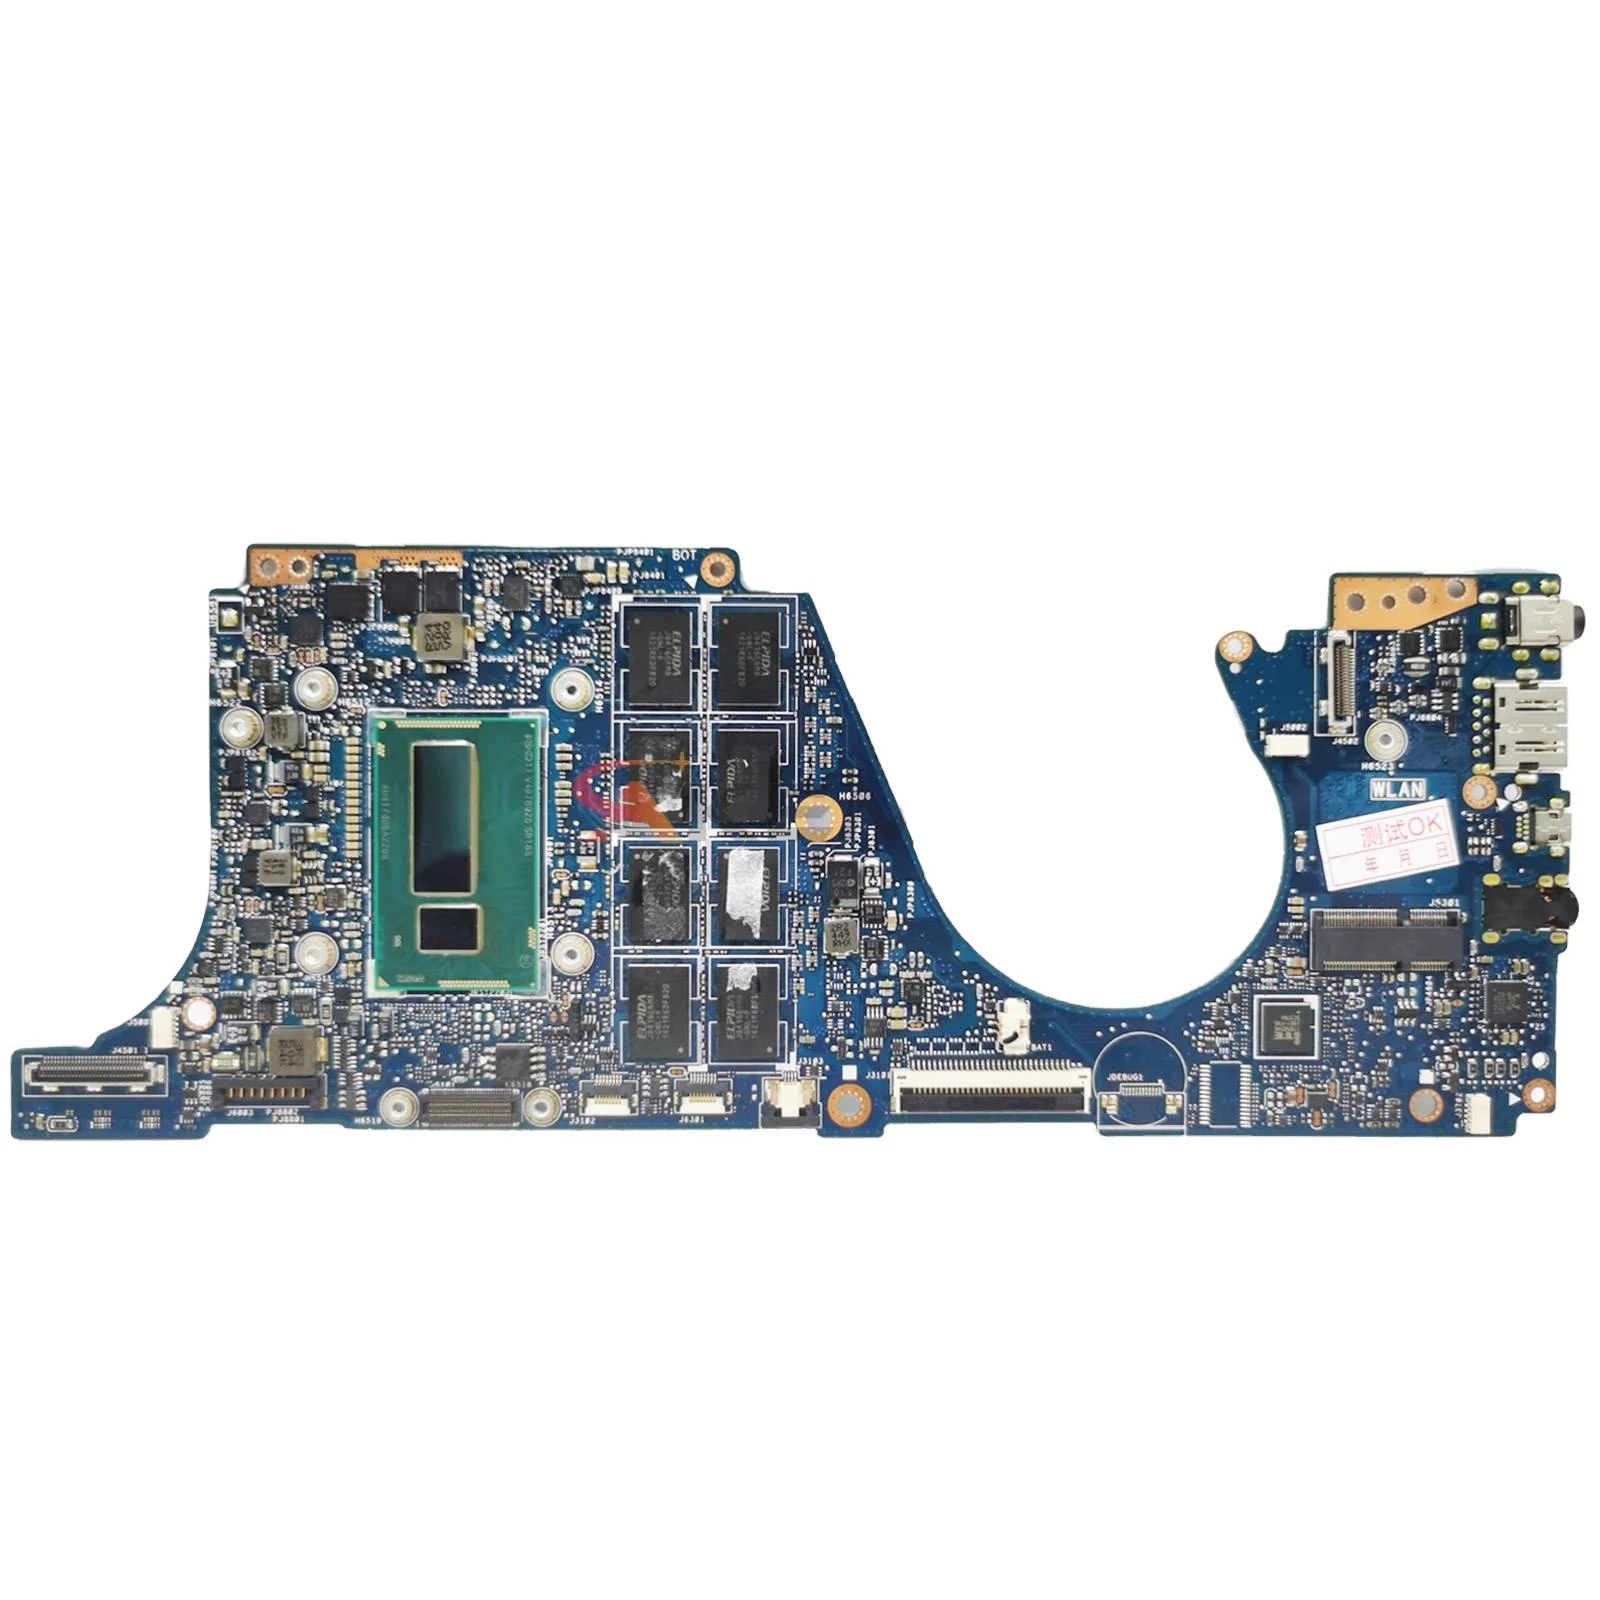 

UX301 Notebook Mainboard For ASUS ZENBOOK UX301L UX301LA Laptop Motherboard I5 I7 4th Gen CPU 4GB/RAM UMA Main Board